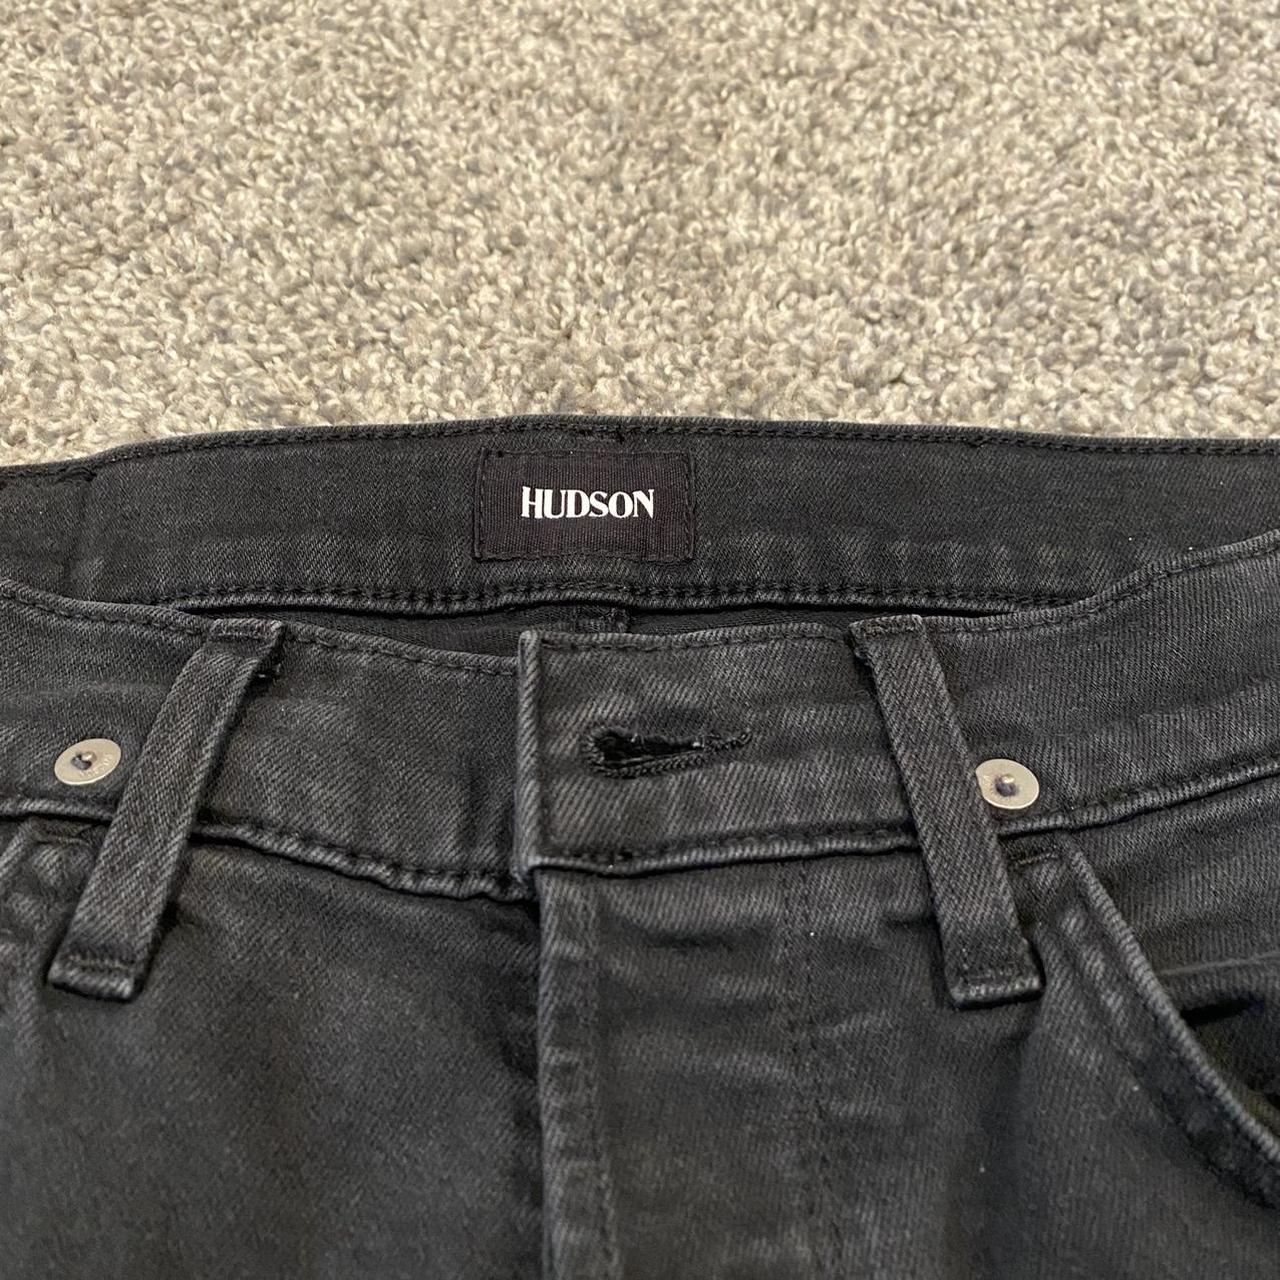 Hudson Jeans Men's Black Jeans